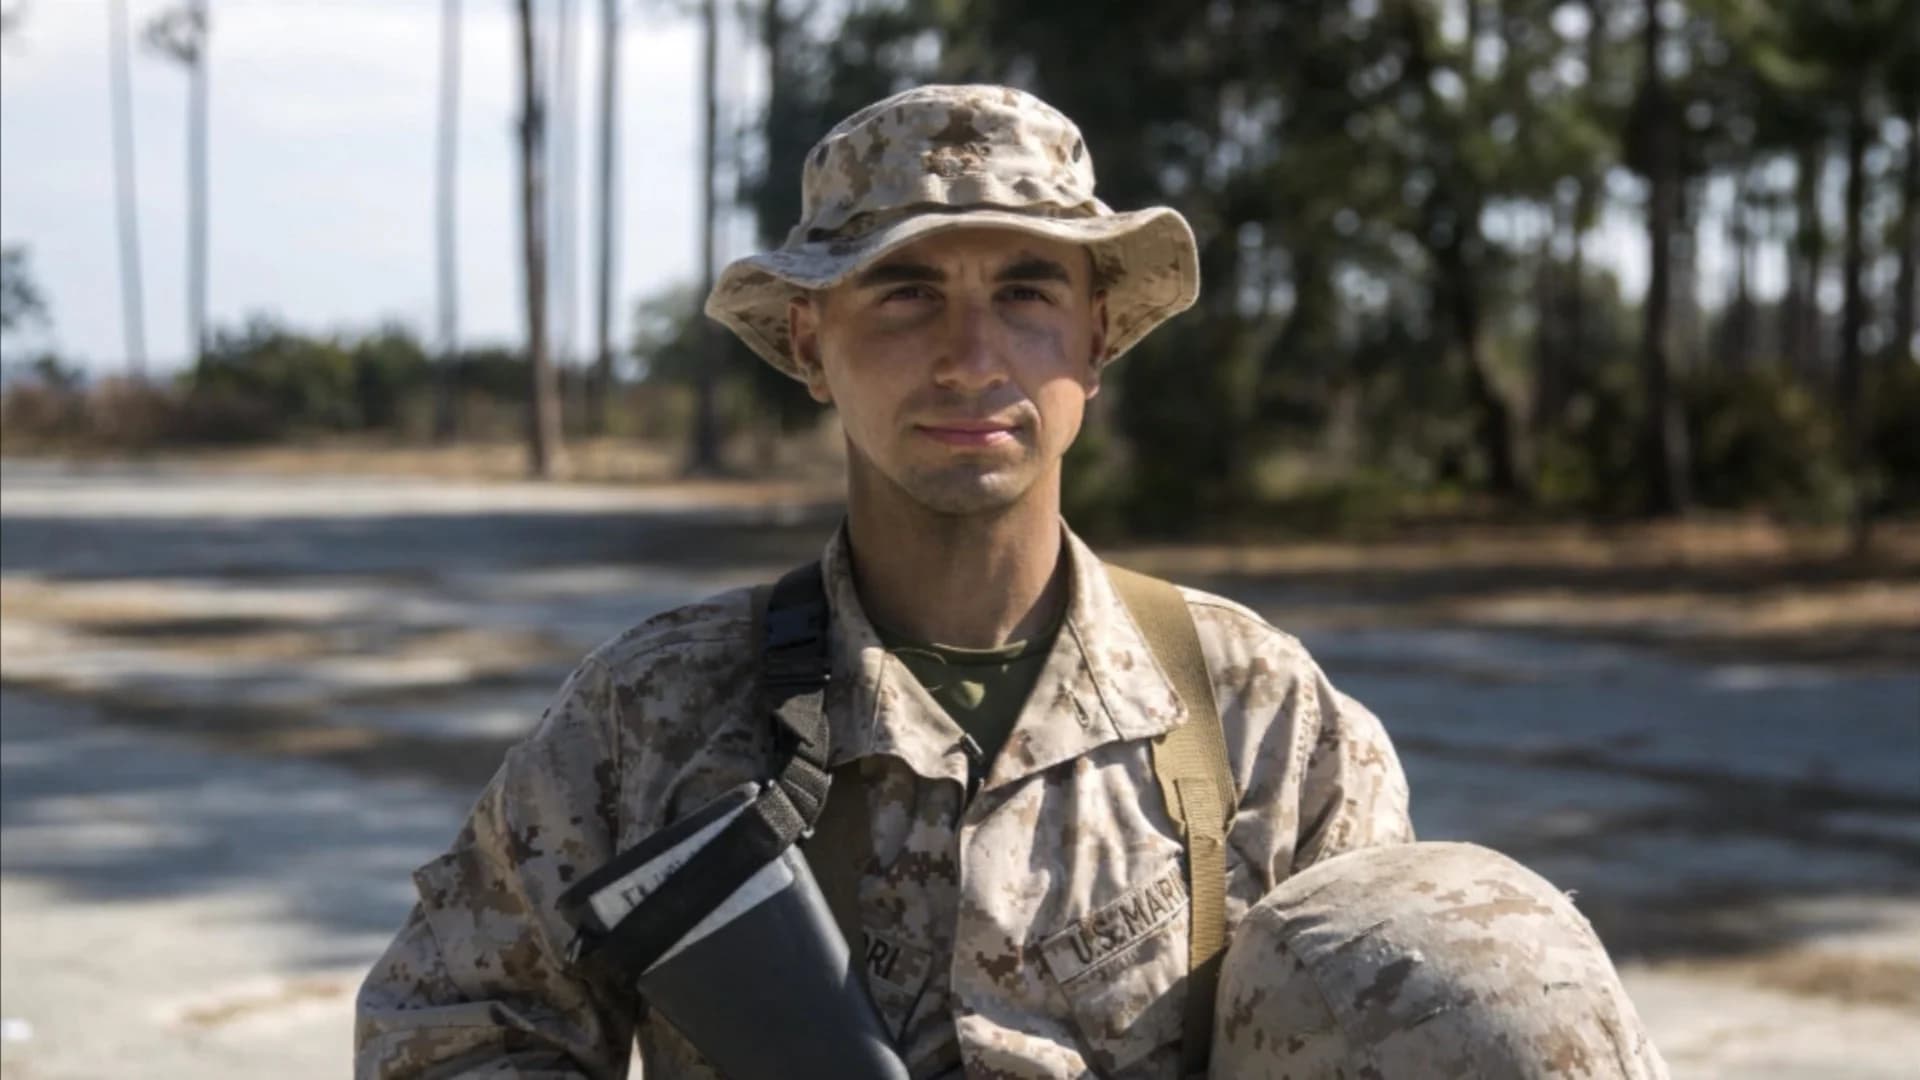 Brick native, once diagnosed with leukemia, now a U.S. Marine